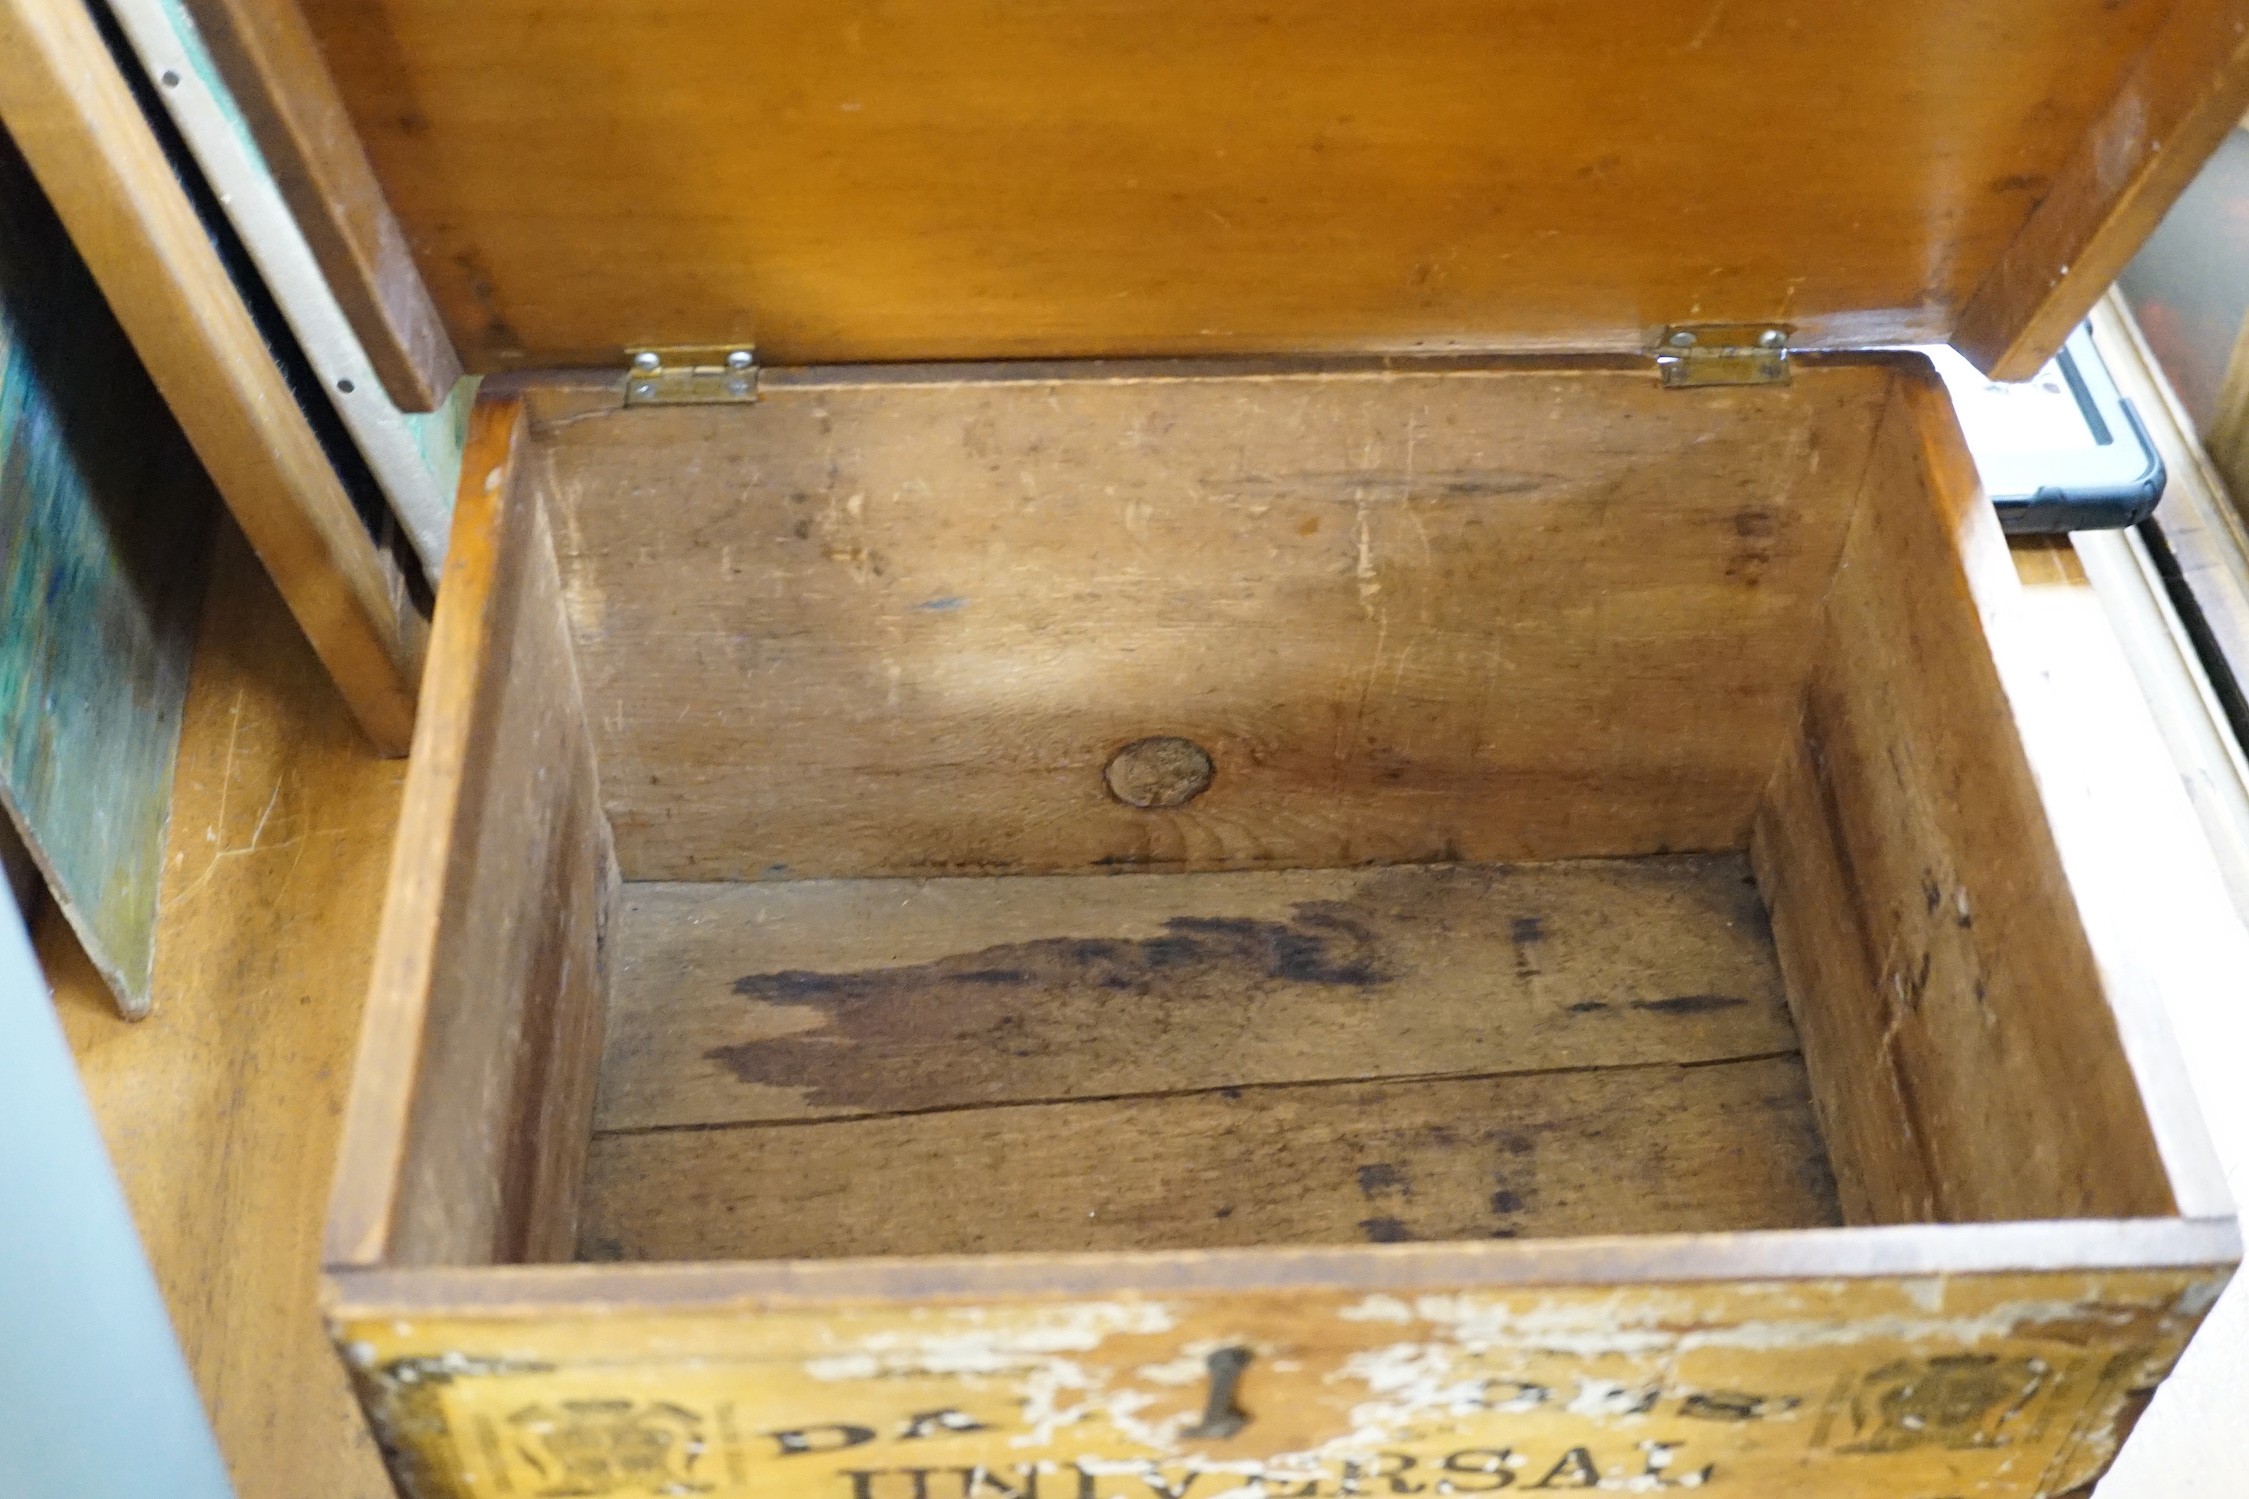 A vintage universal medicine chest